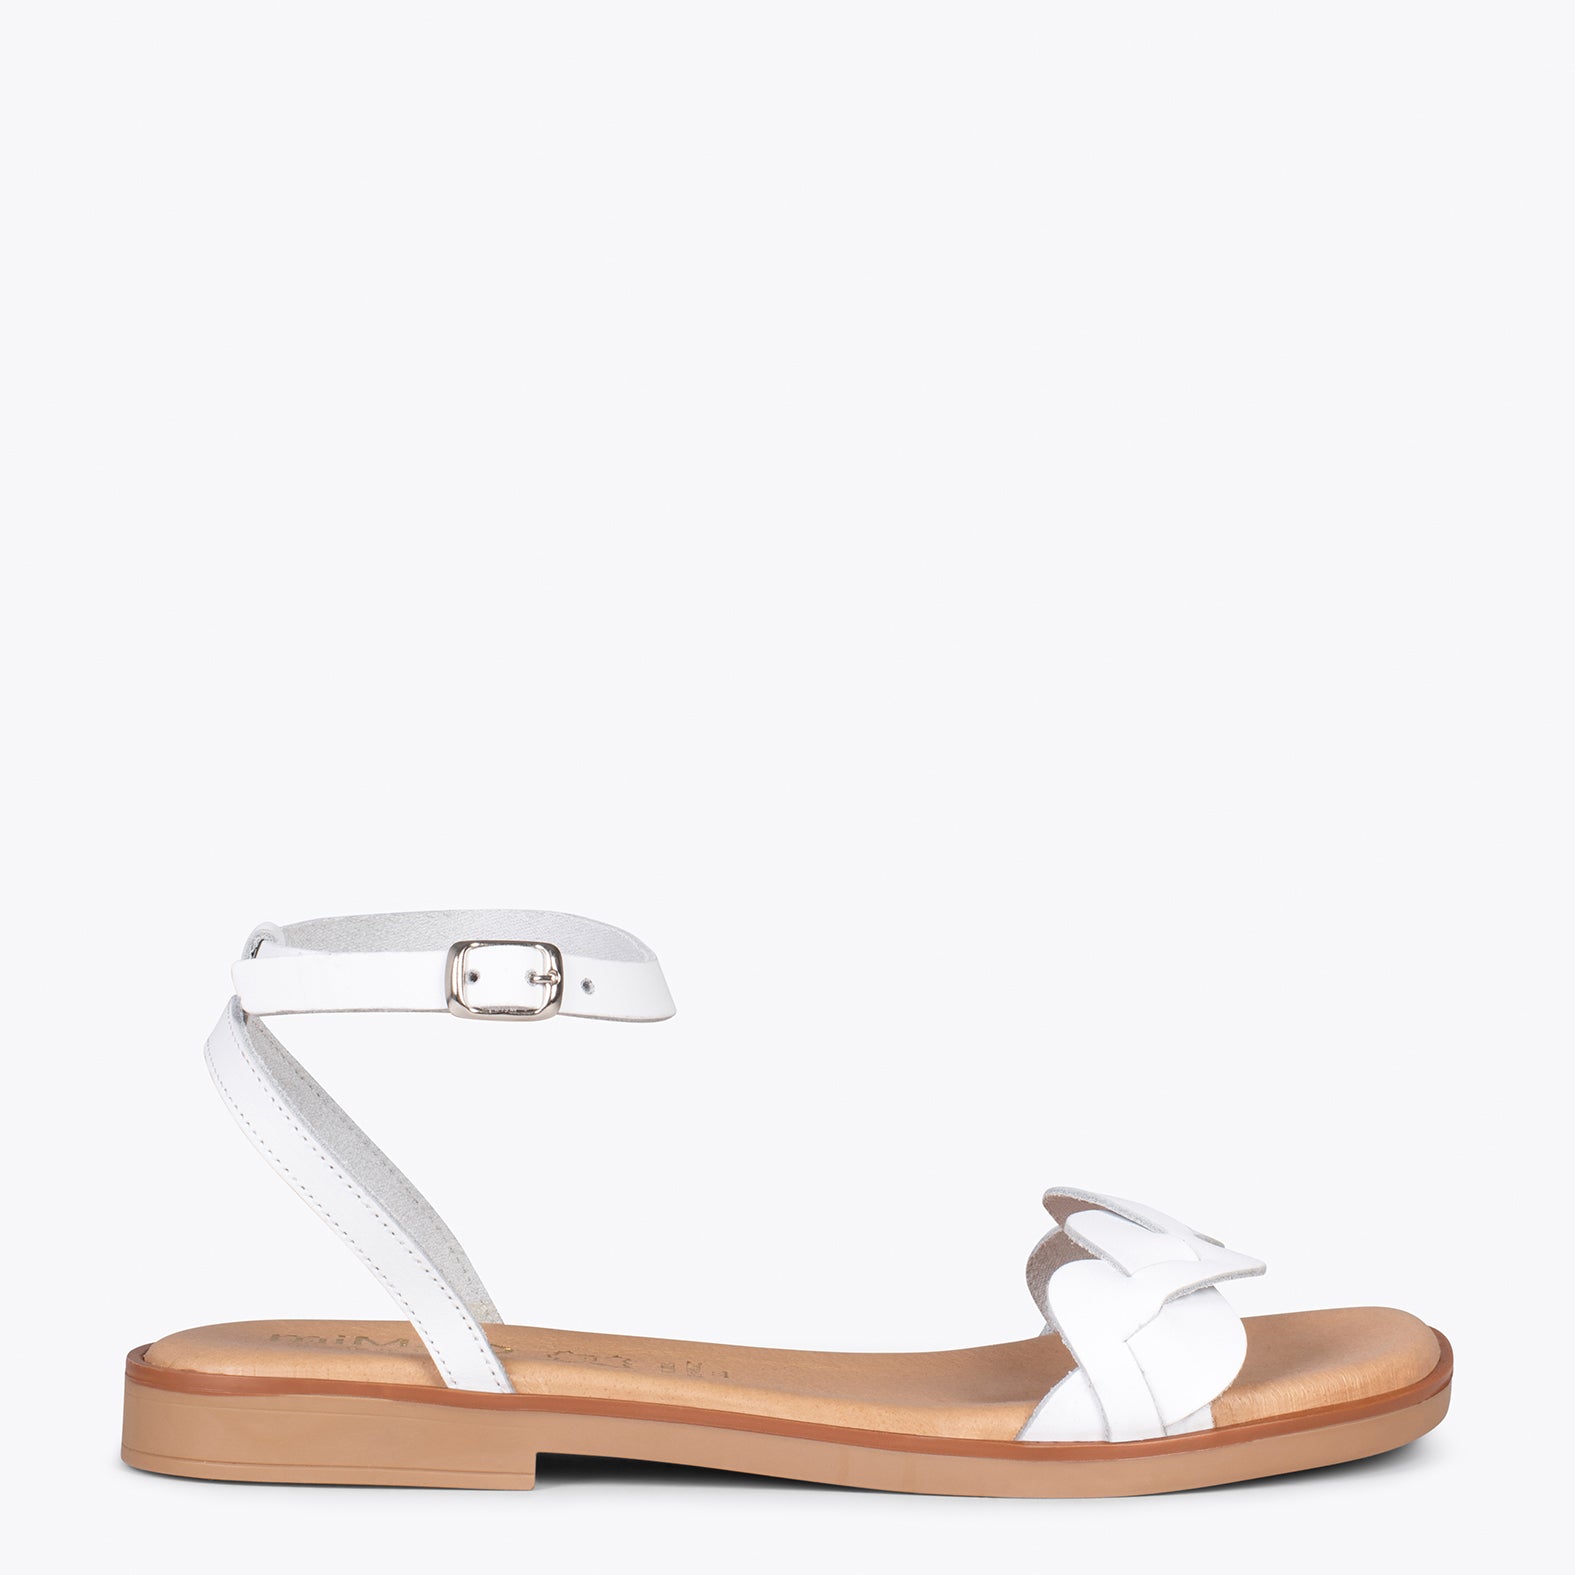 ARECA – WHITE flat sandal with braided upper